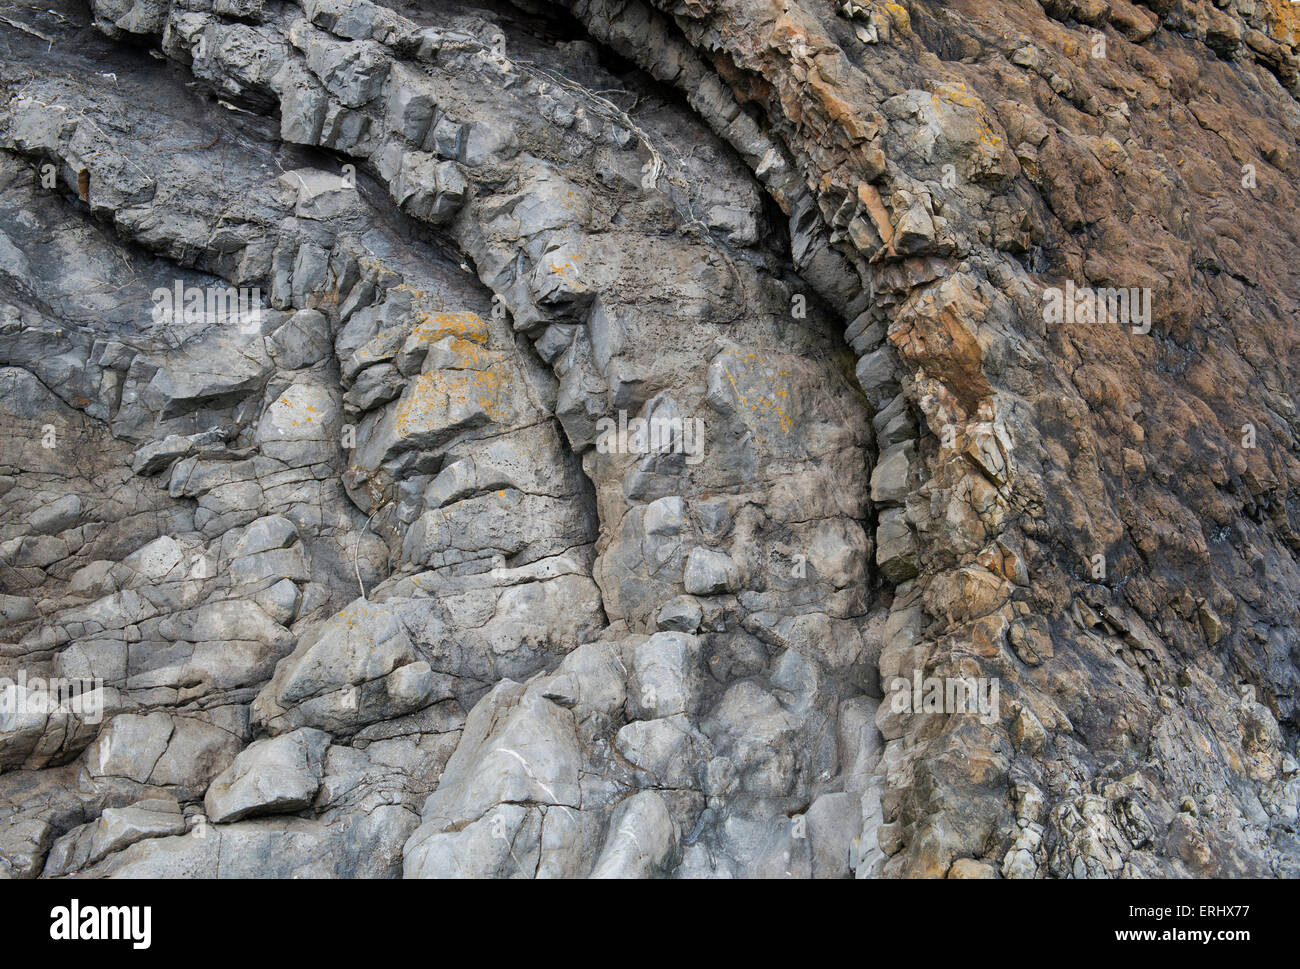 Carboniferous Rocks at Saltpan Rocks, Scremerston, Berwick Upon Tweed, Northumberland, England Stock Photo